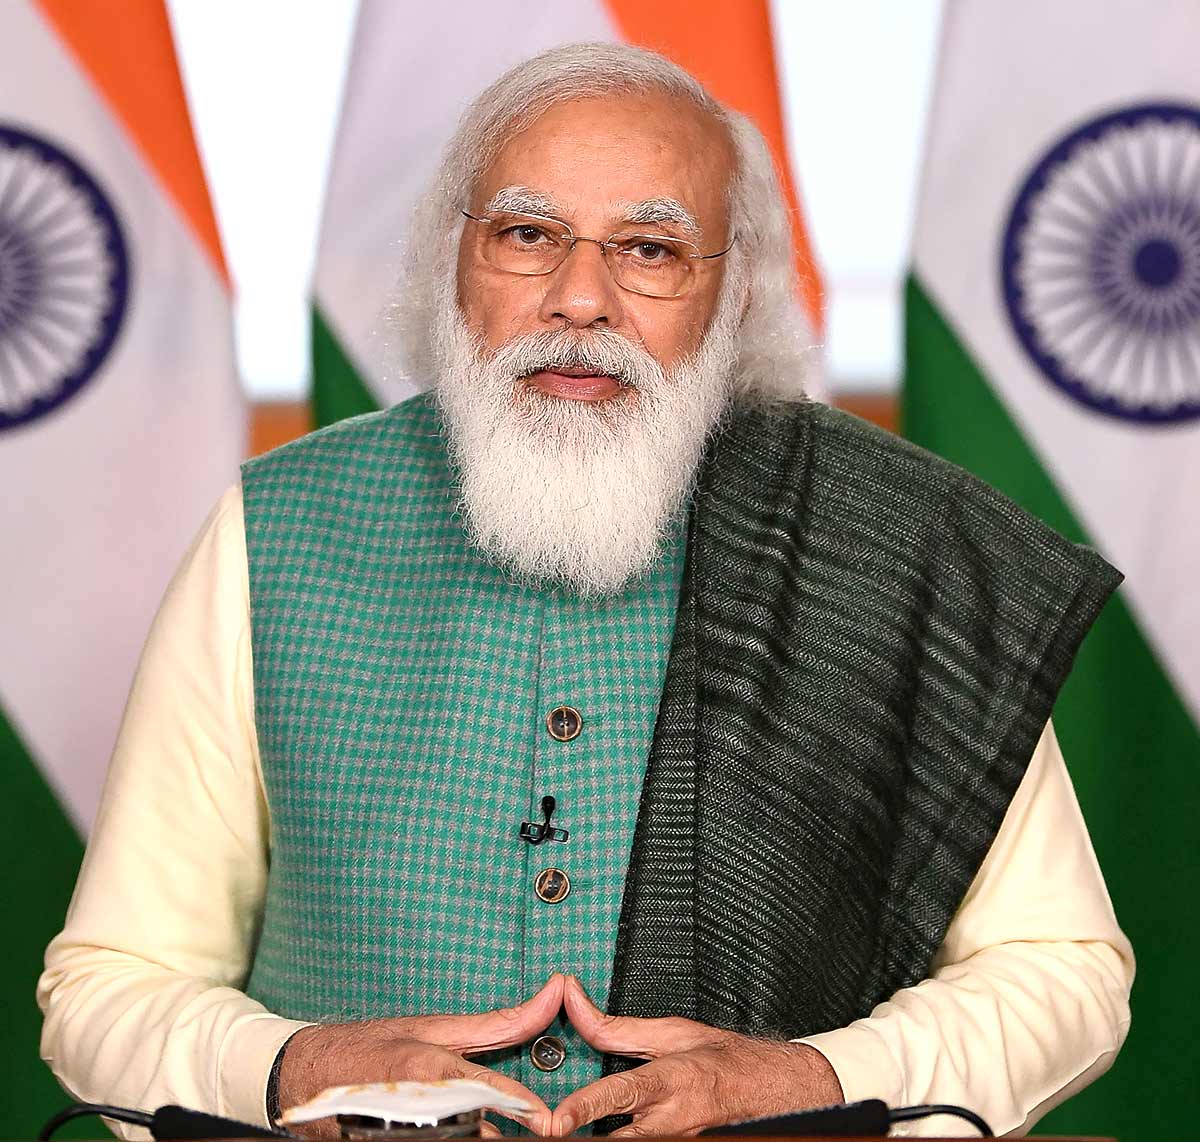 PM Modi Long Beard Style